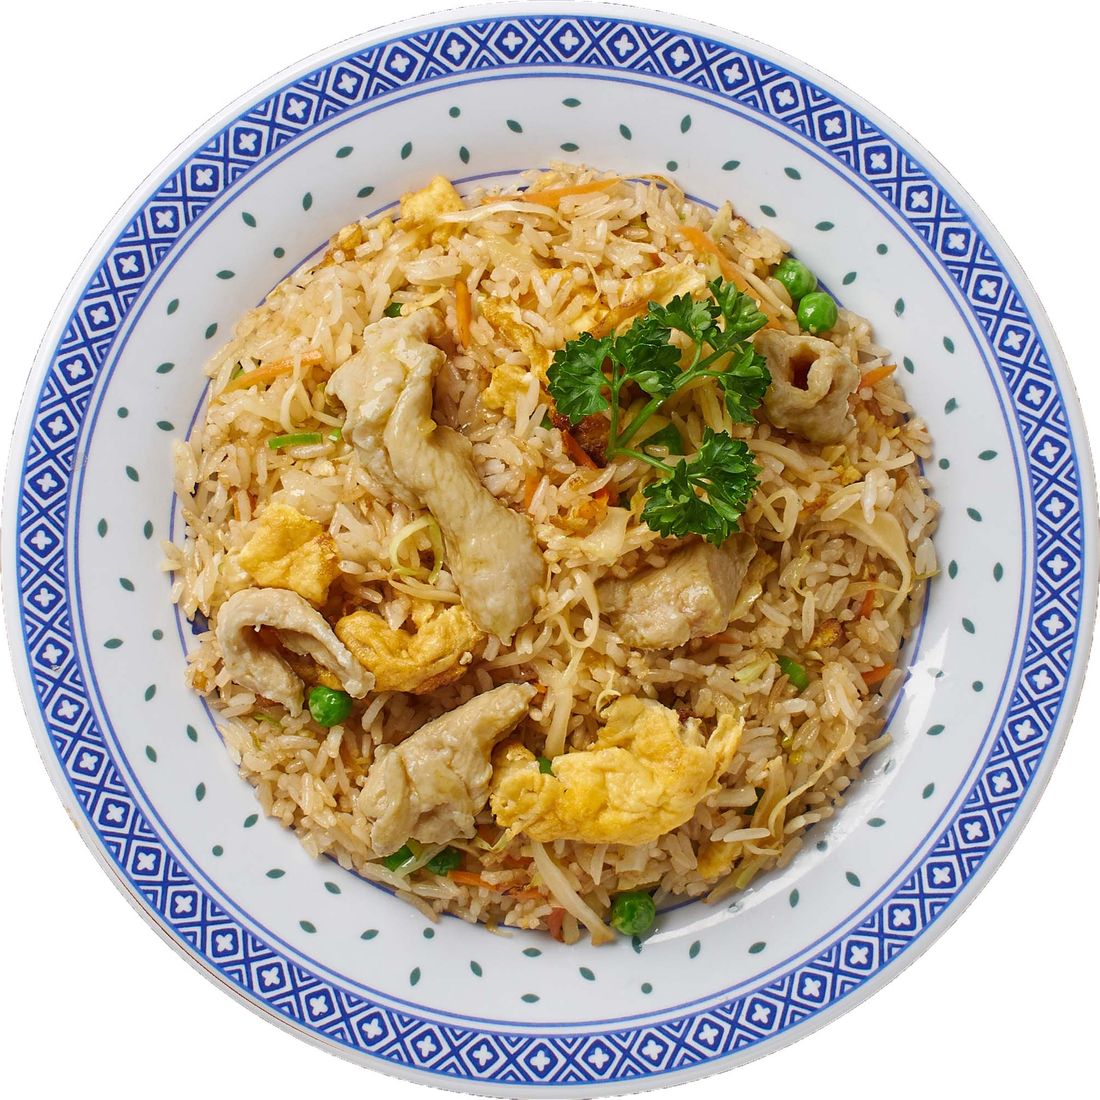 Gebratener Reis mit Poulet - Kilin Palast China Food in Lachen